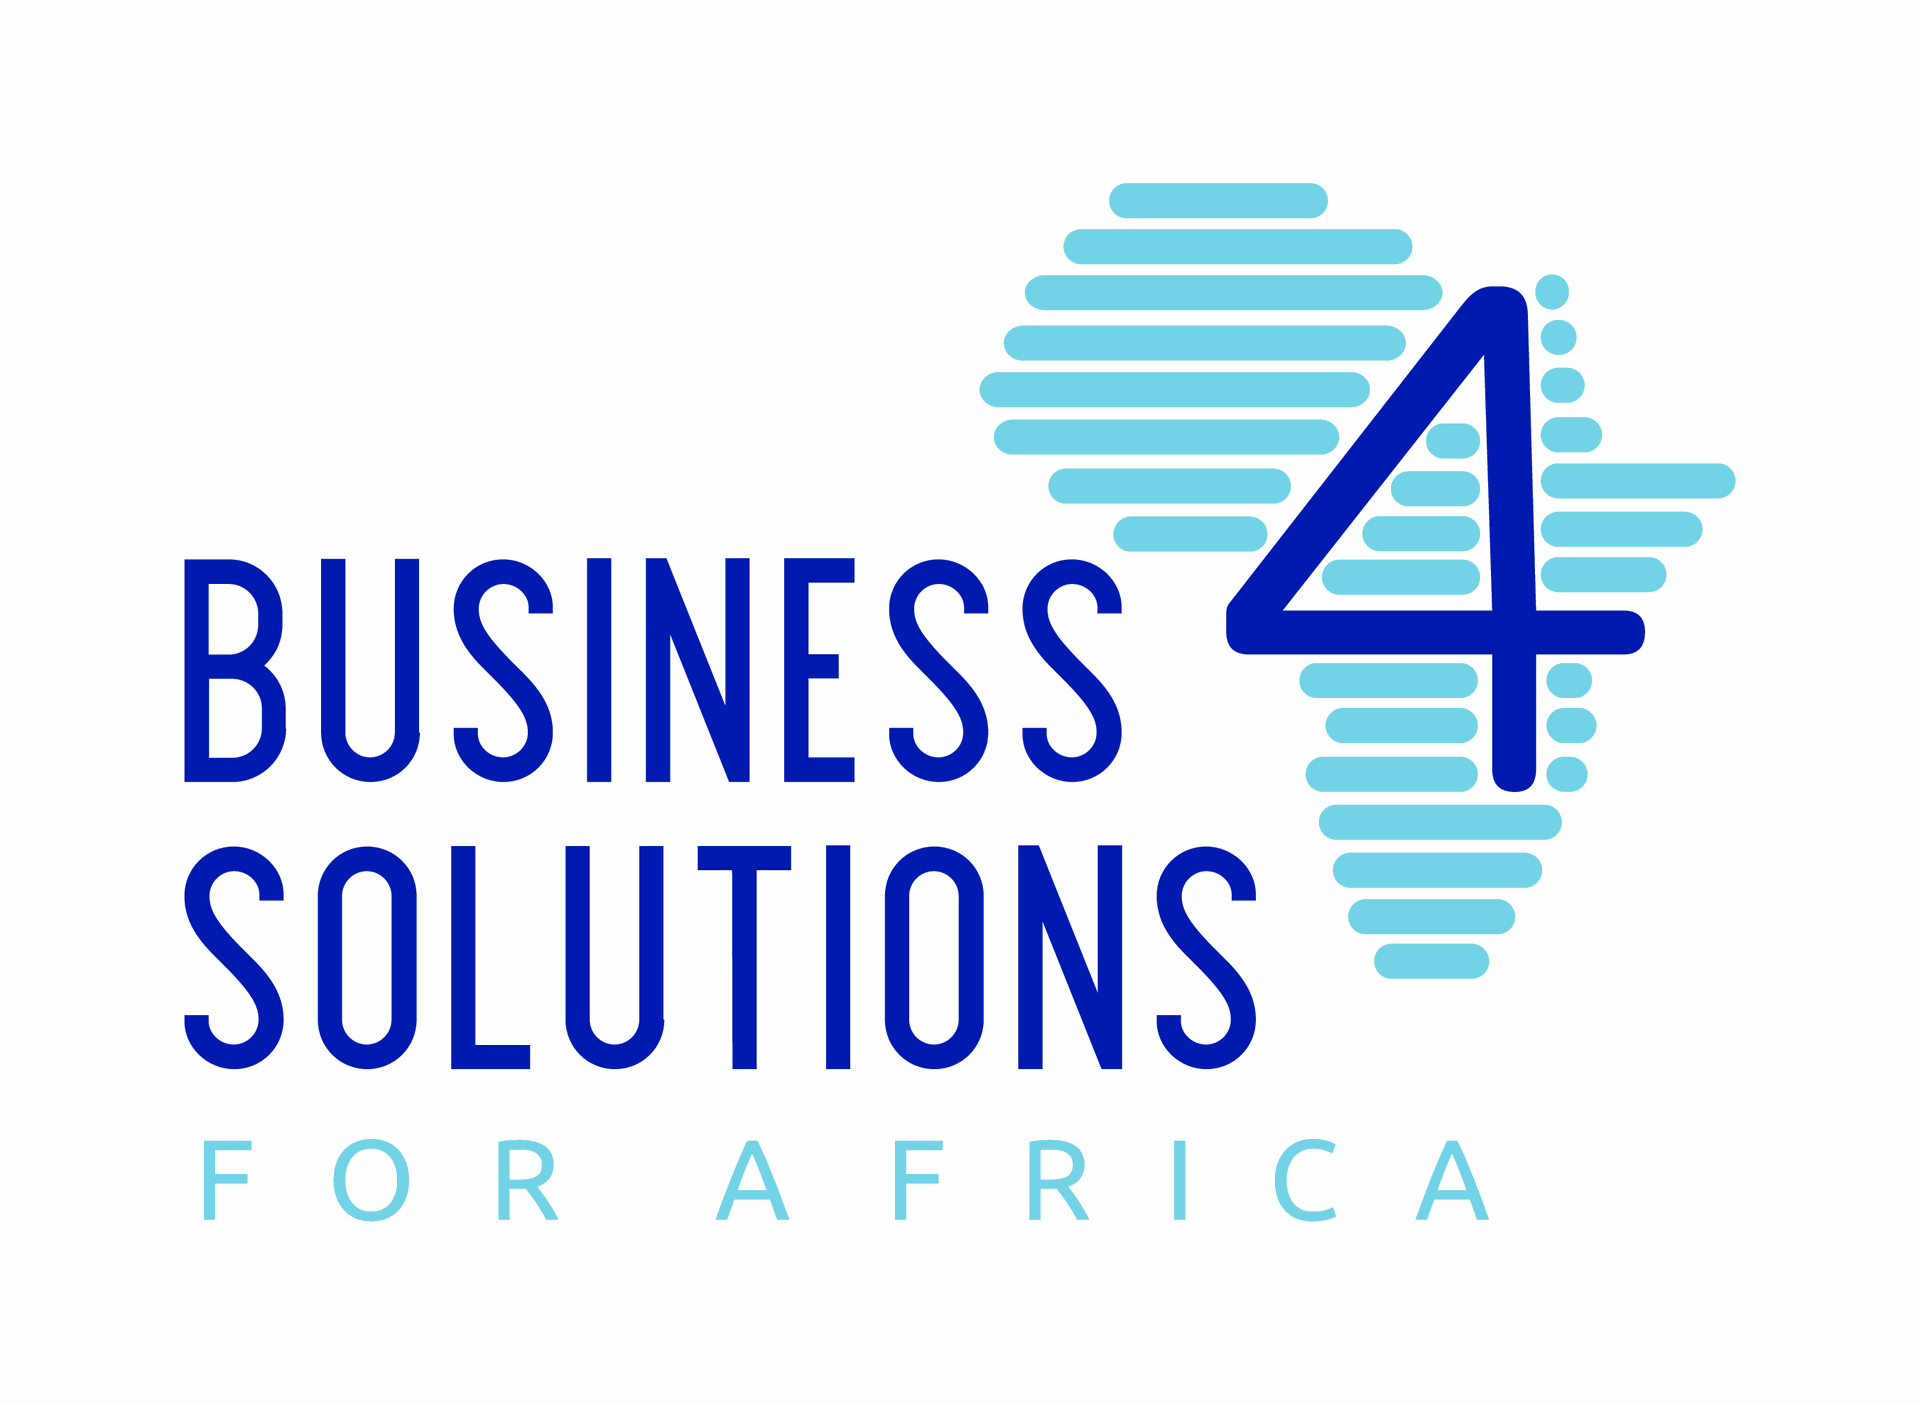 www.biz-4-africa.com